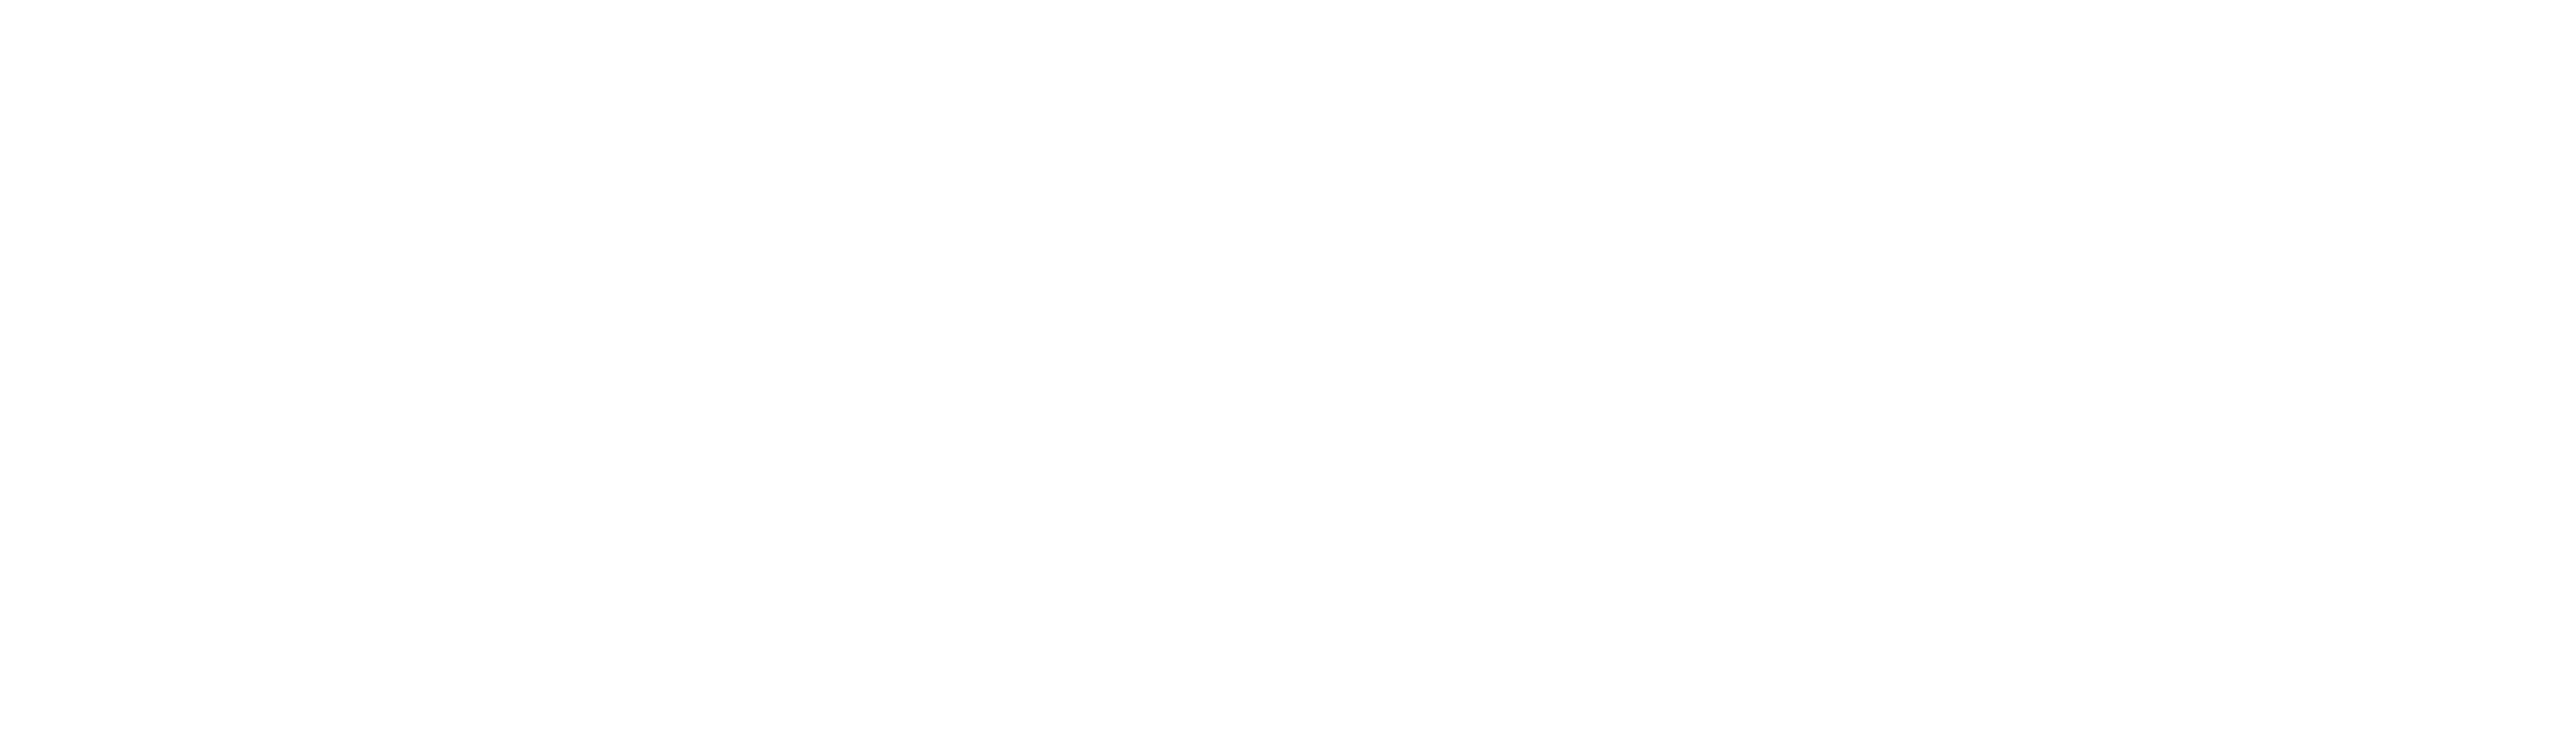 The Big Eleven